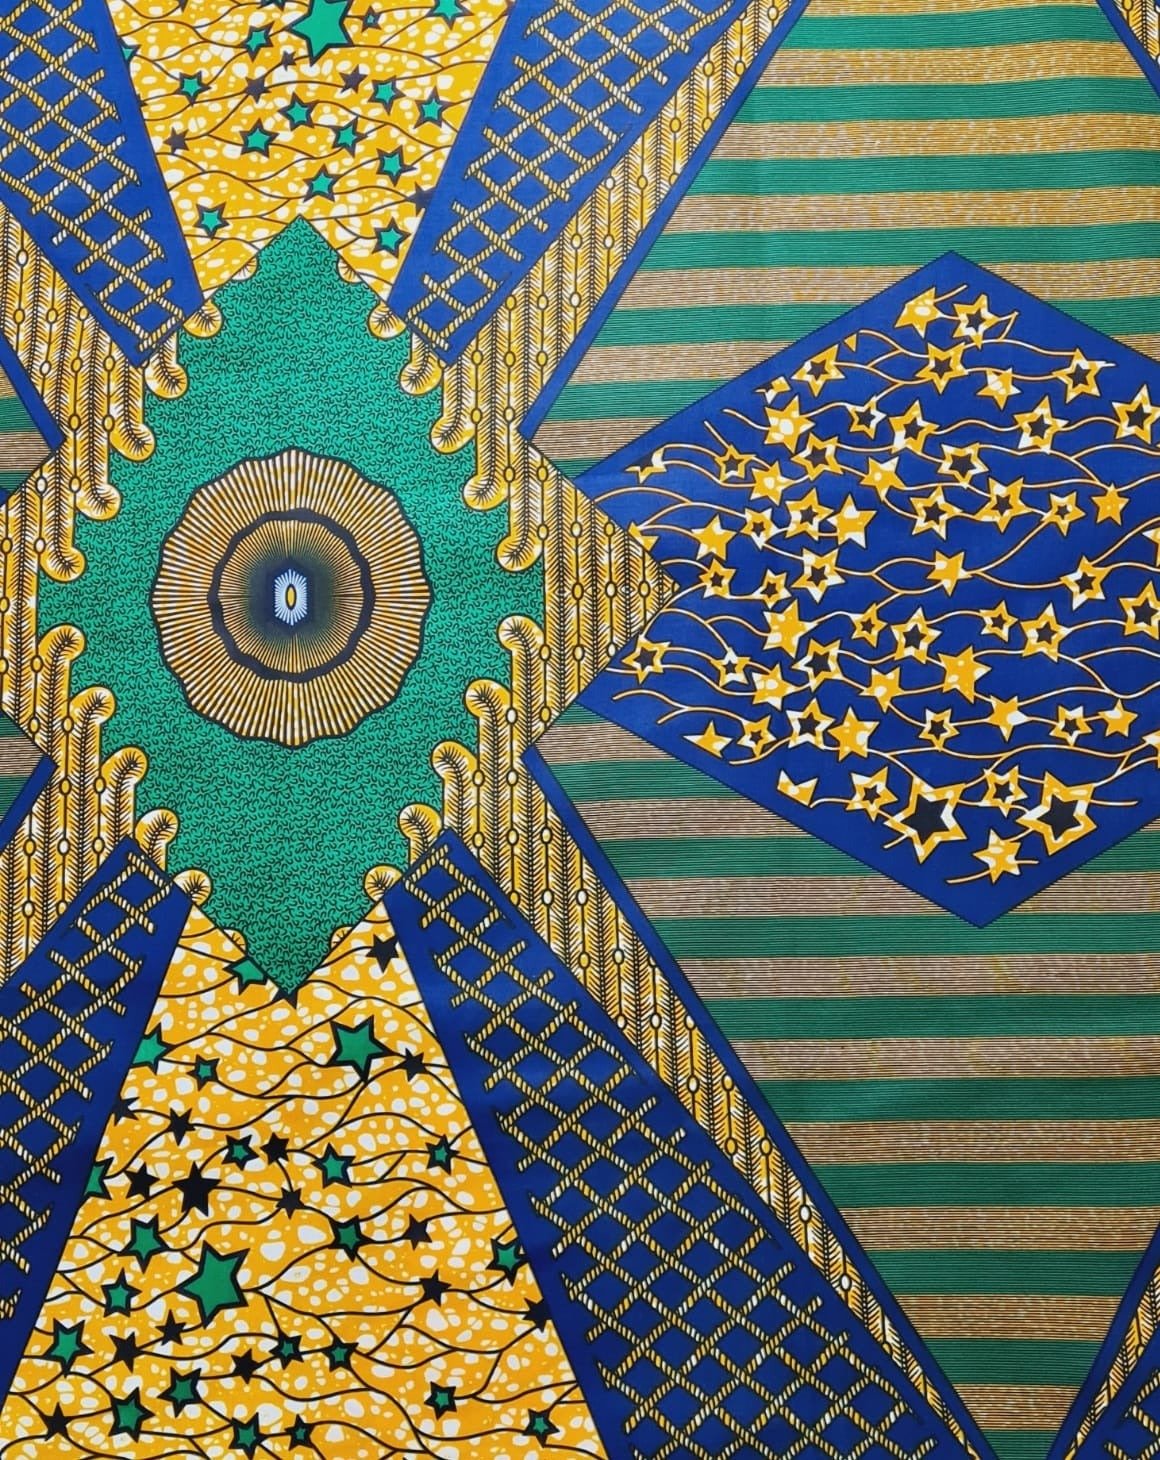 Green & Yellow Ankara Fabric - ak40167 - House of Prints